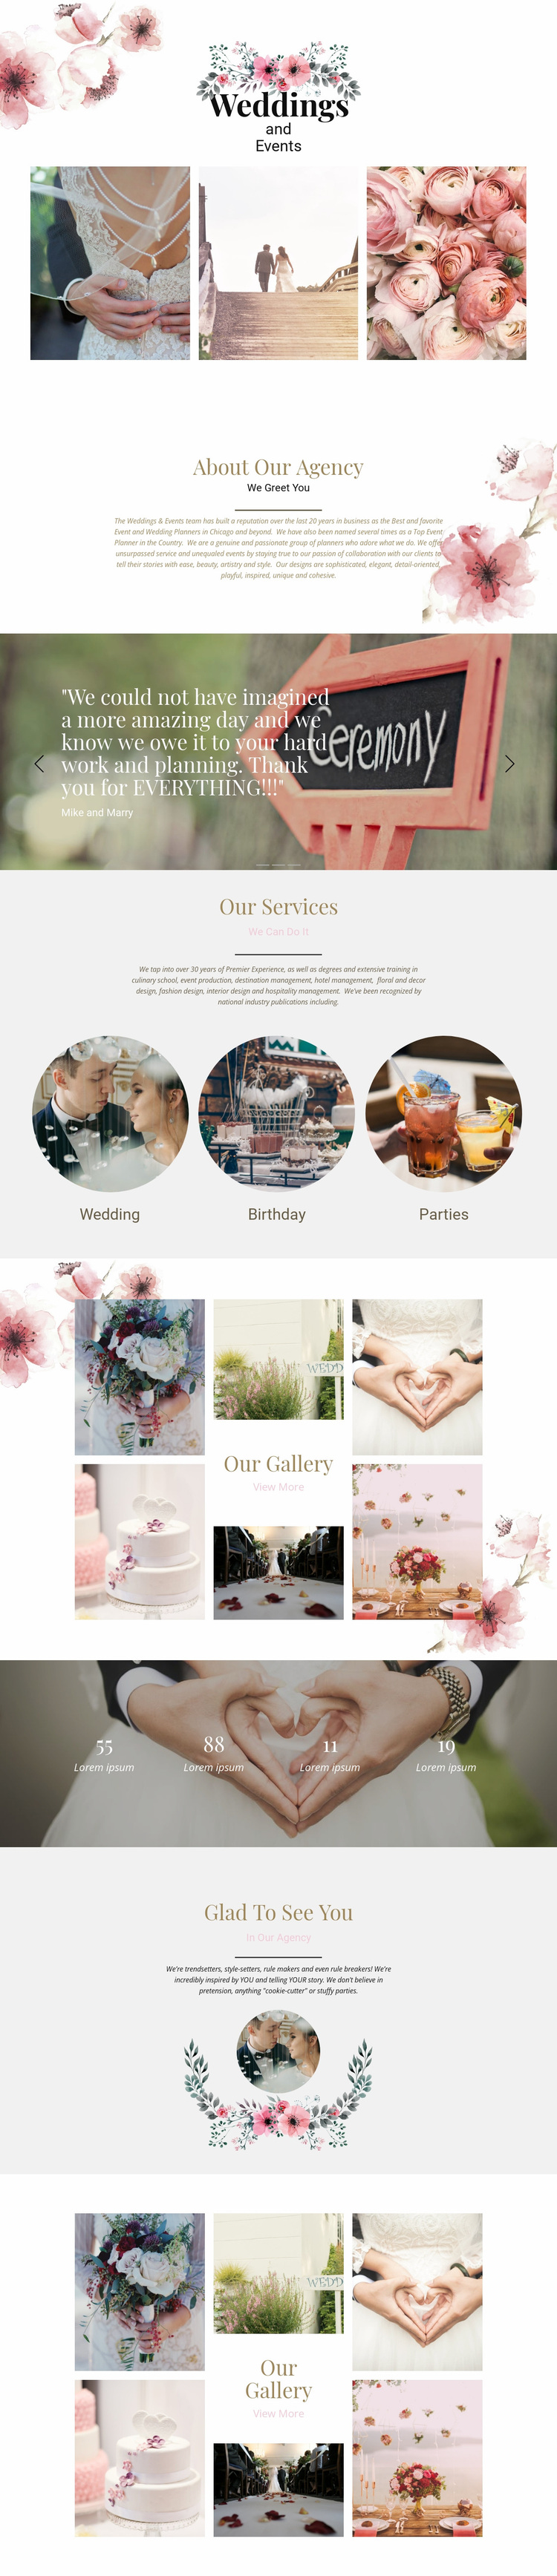 Moments of wedding Website Design